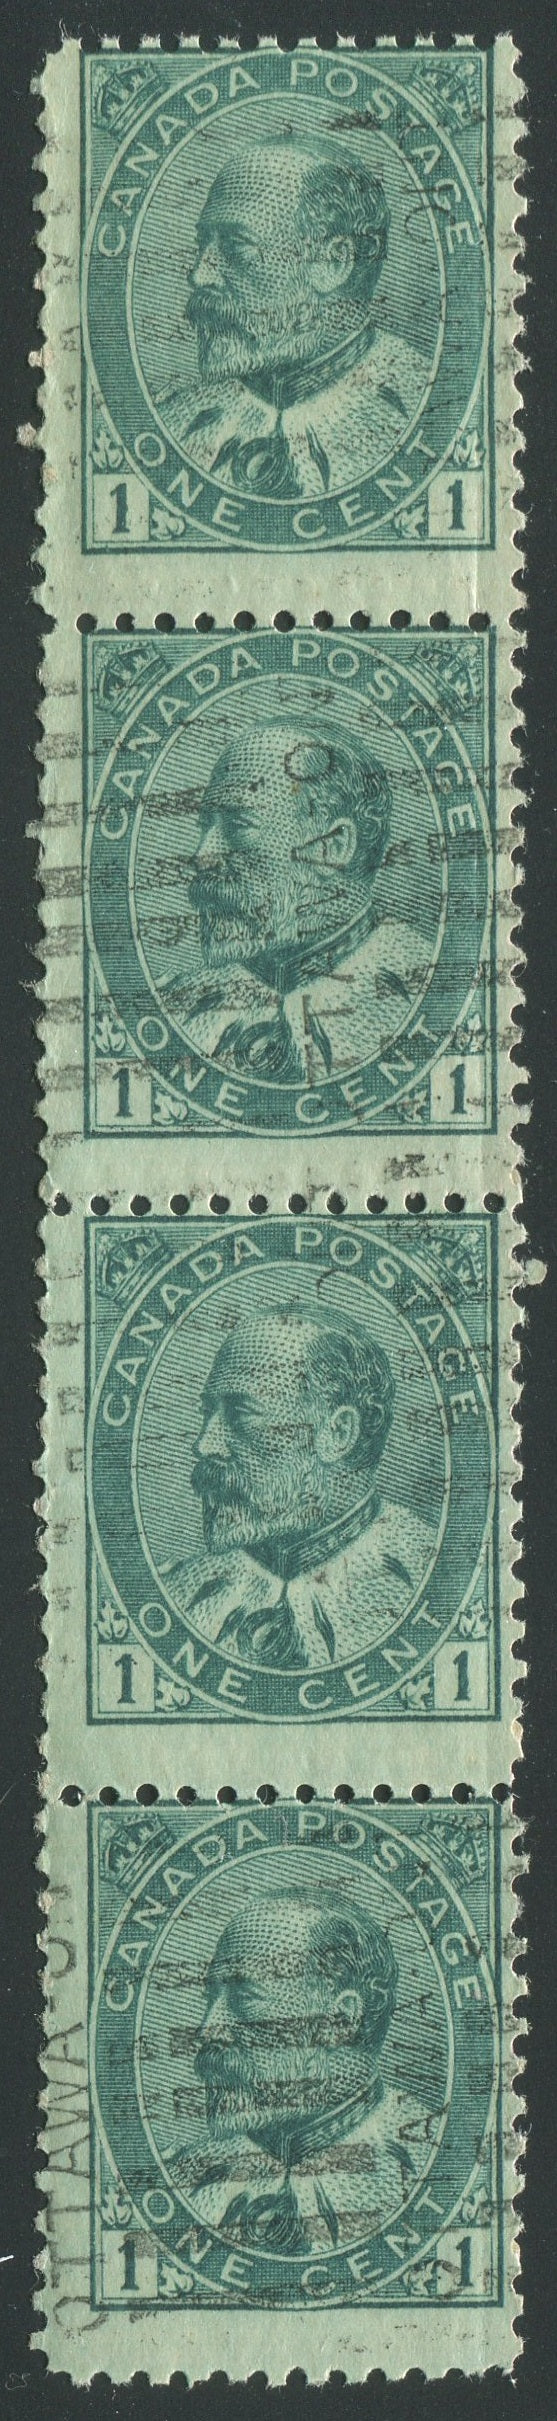 0089CA1810 - Canada #89xxxii - Mint Experimental Coil Strip of 4